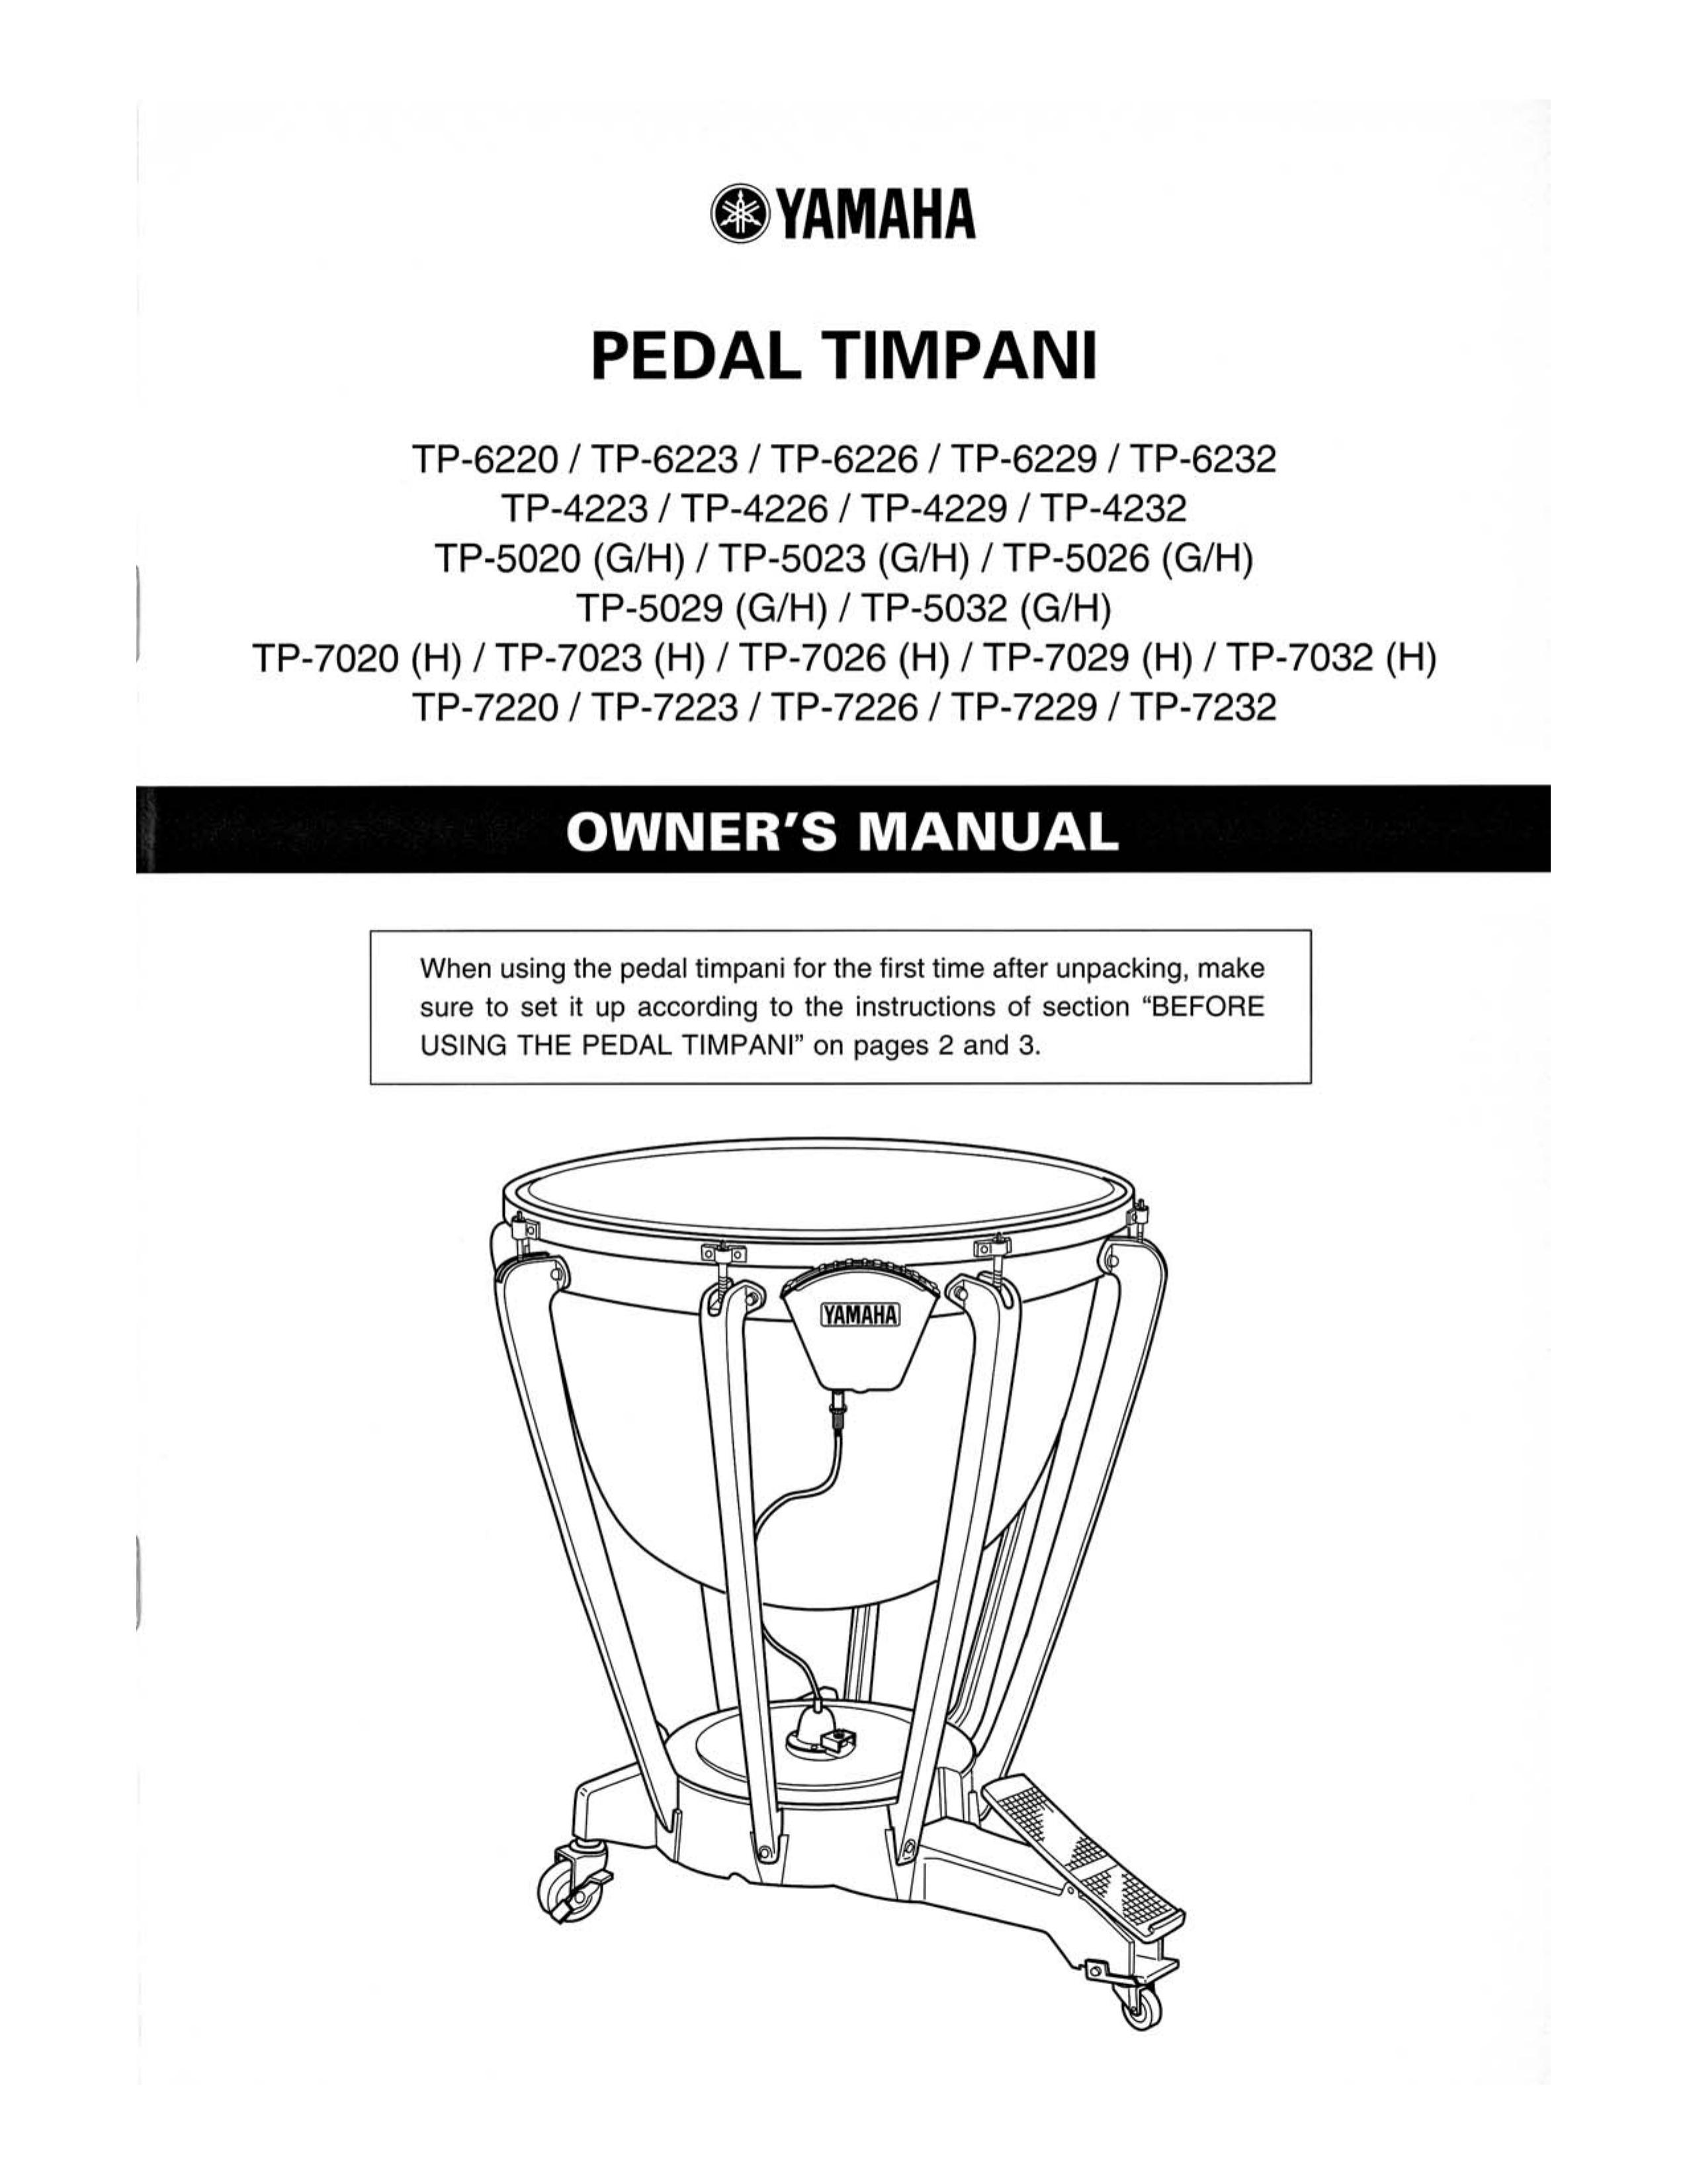 Yamaha TP-5020 Music Pedal User Manual